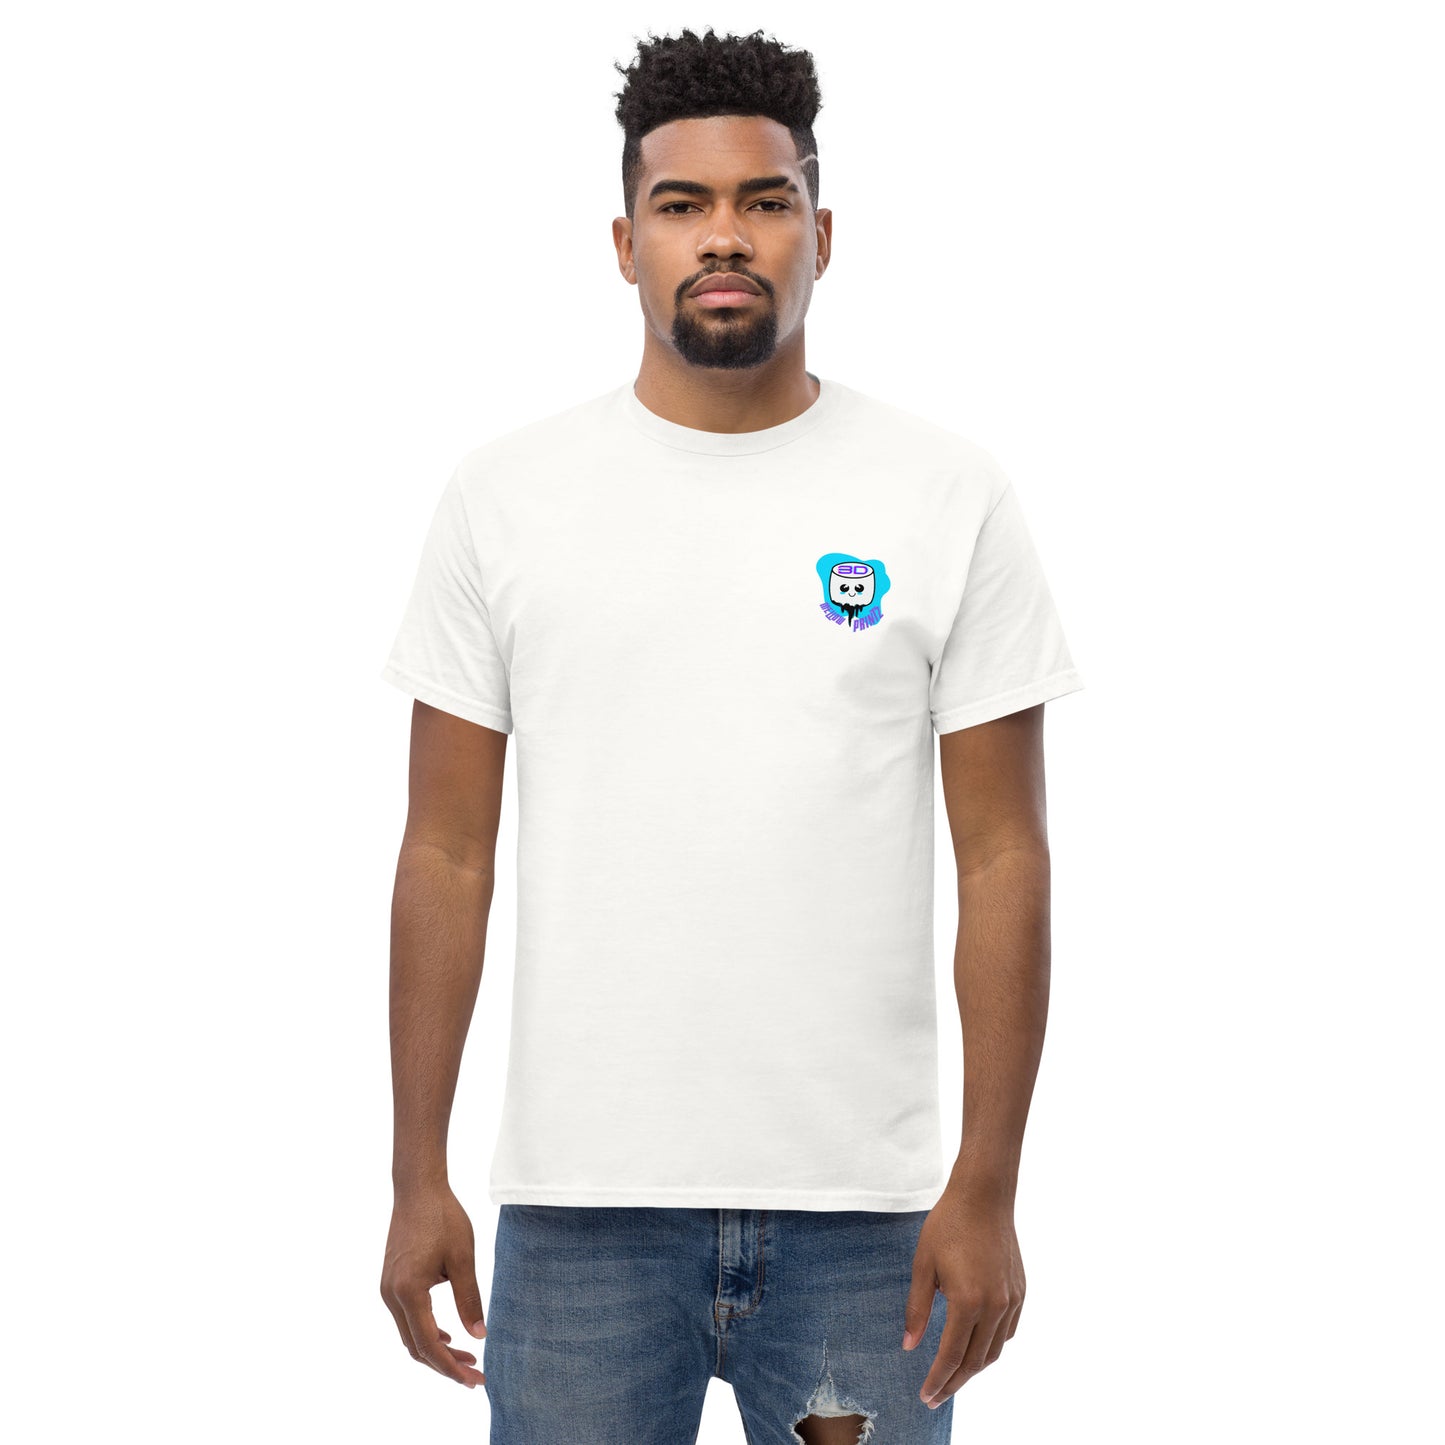 SWAG SHIRTZ | Men's "Shop" Shirt